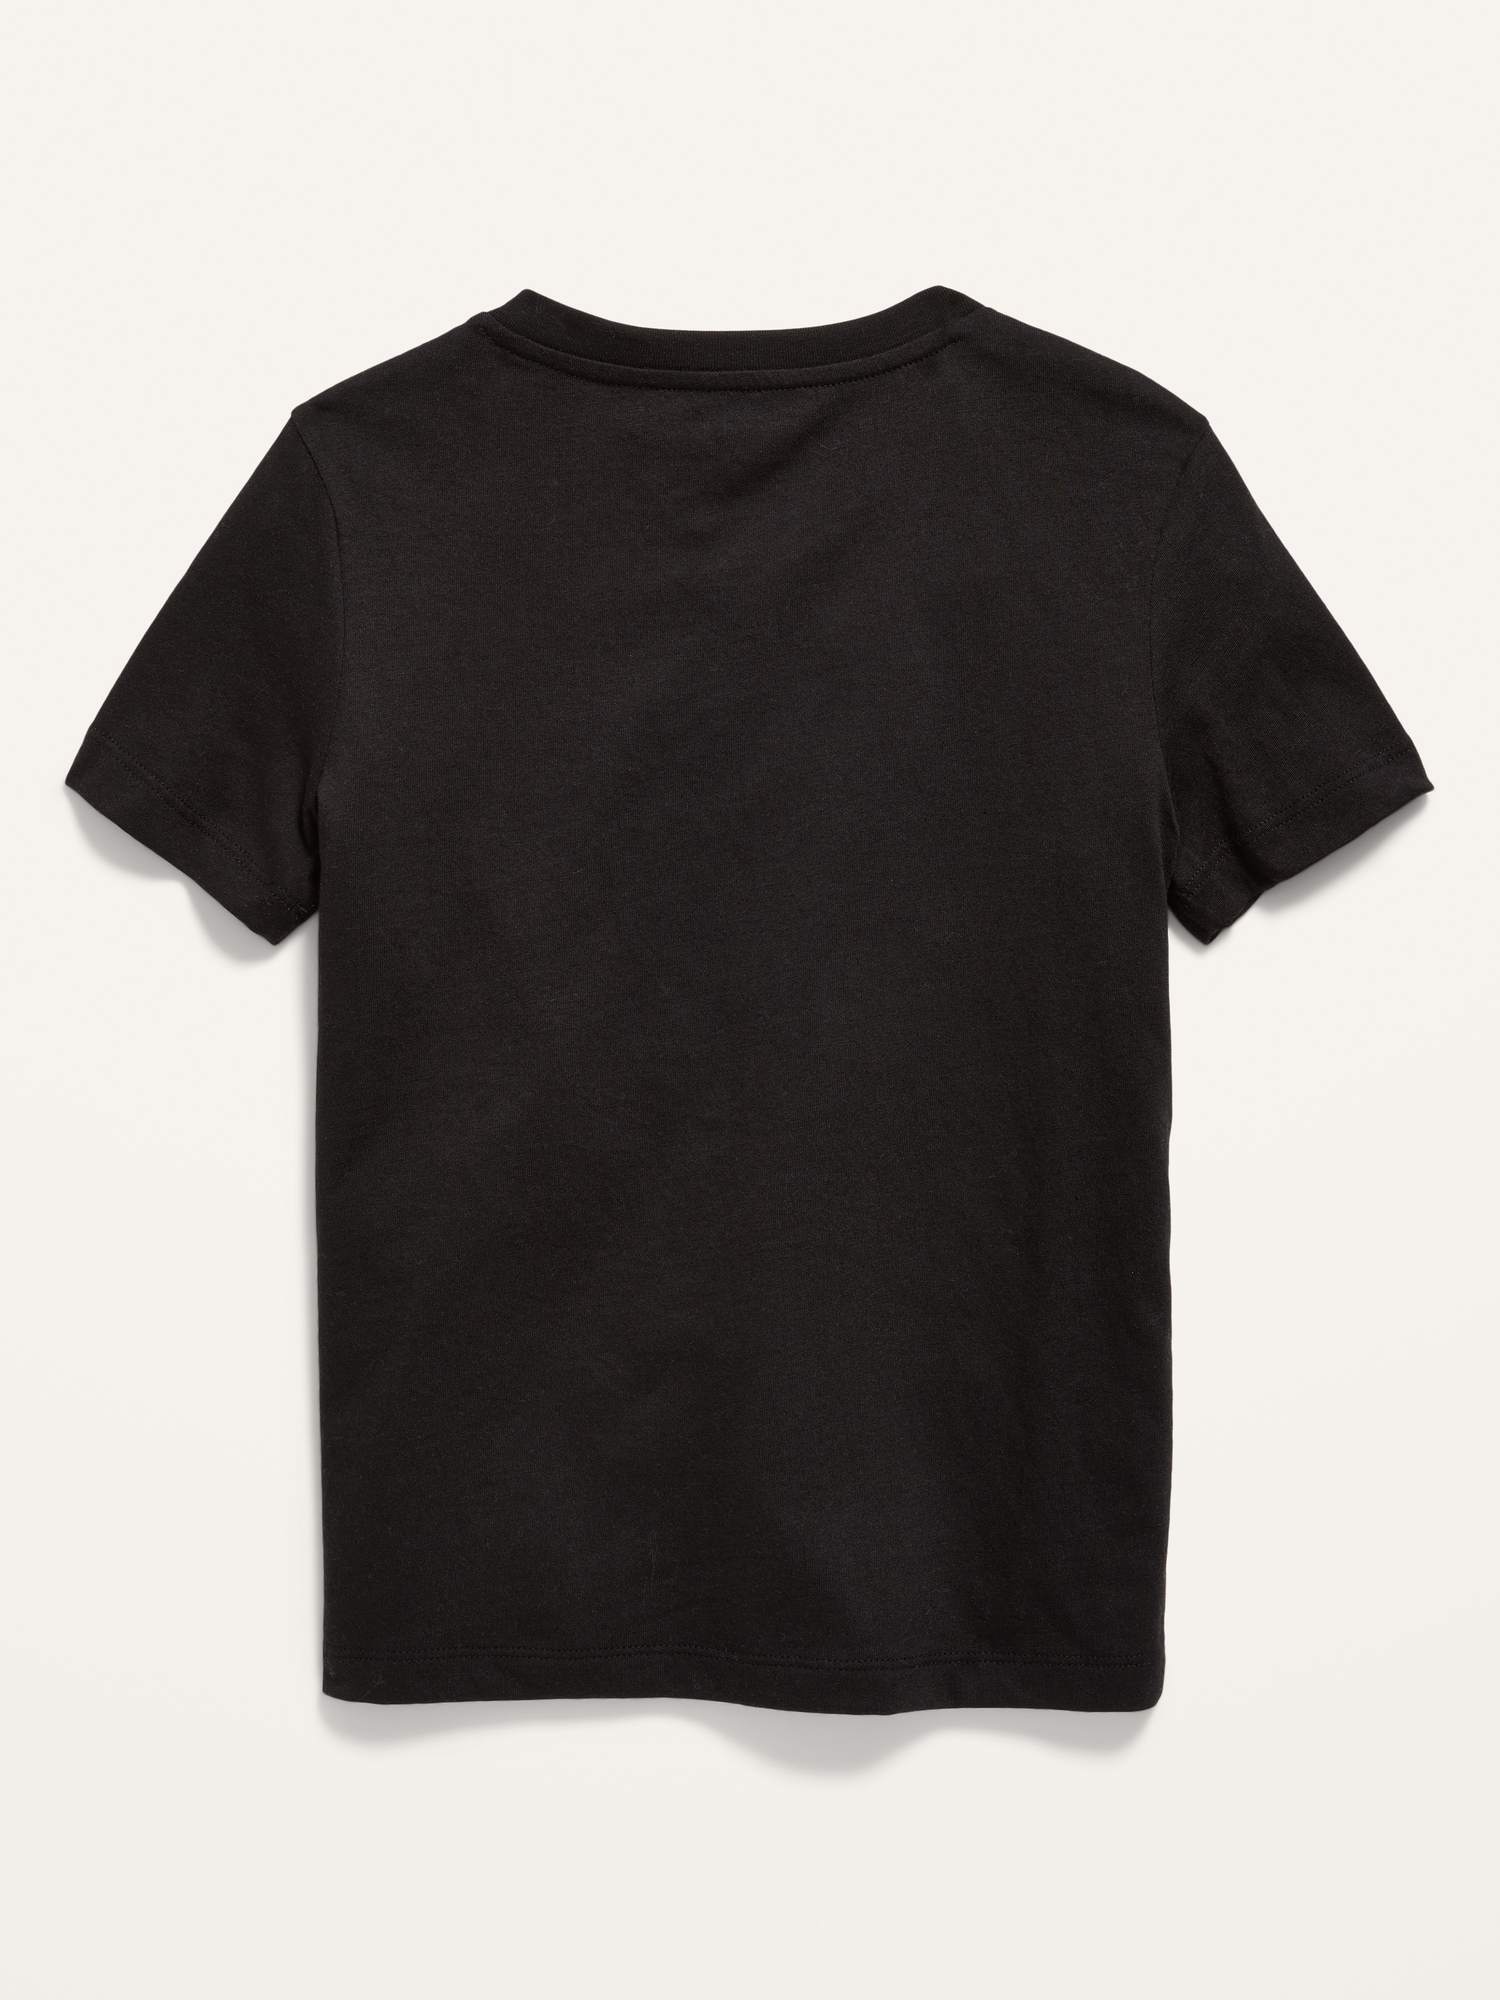 Softest V-Neck T-Shirt for Boys | Old Navy